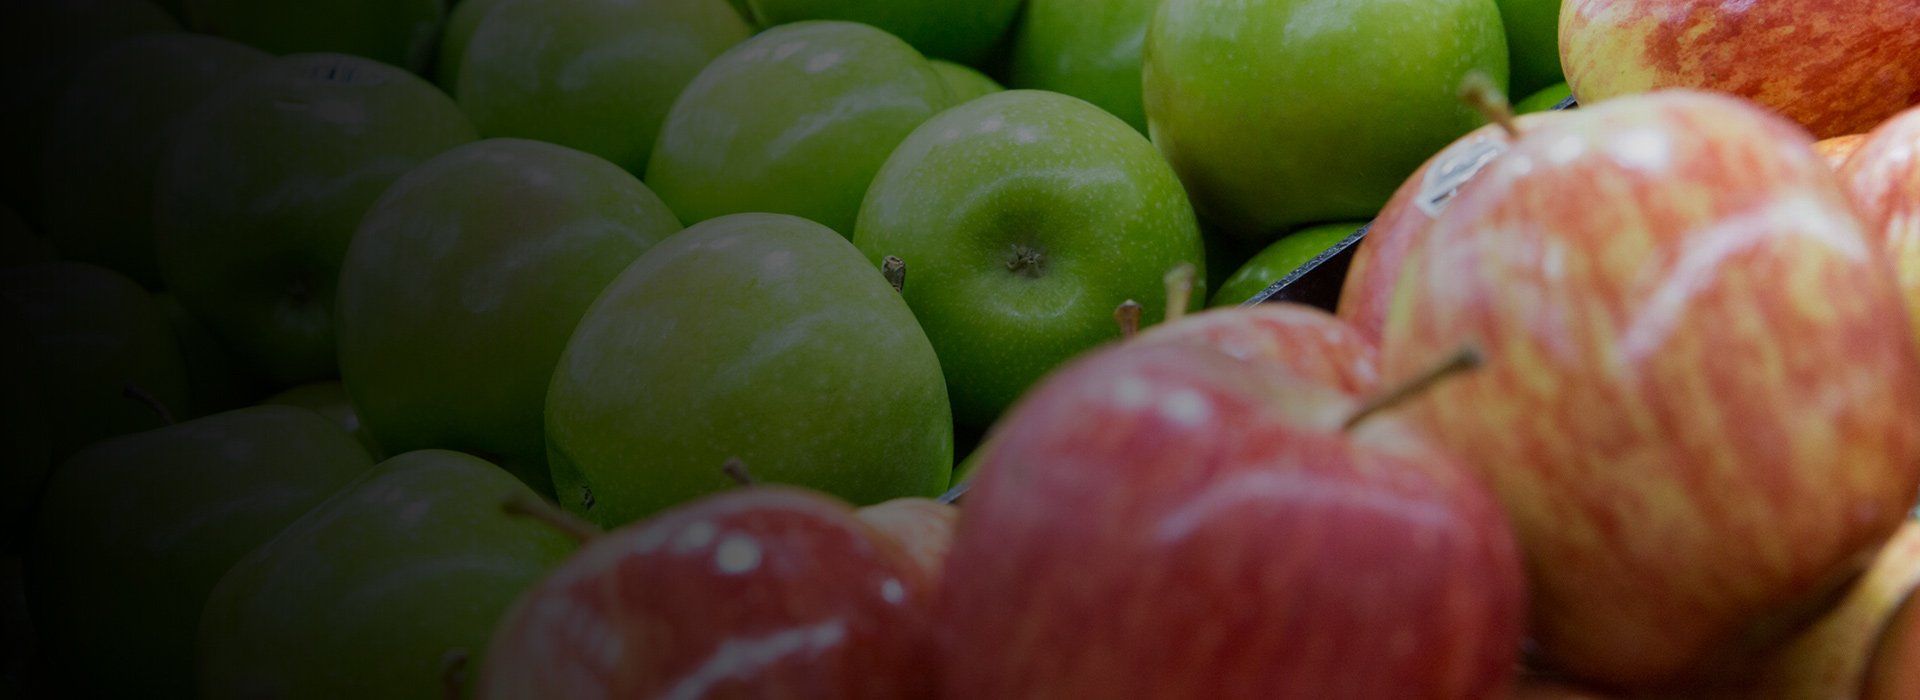 fruits at supermarket